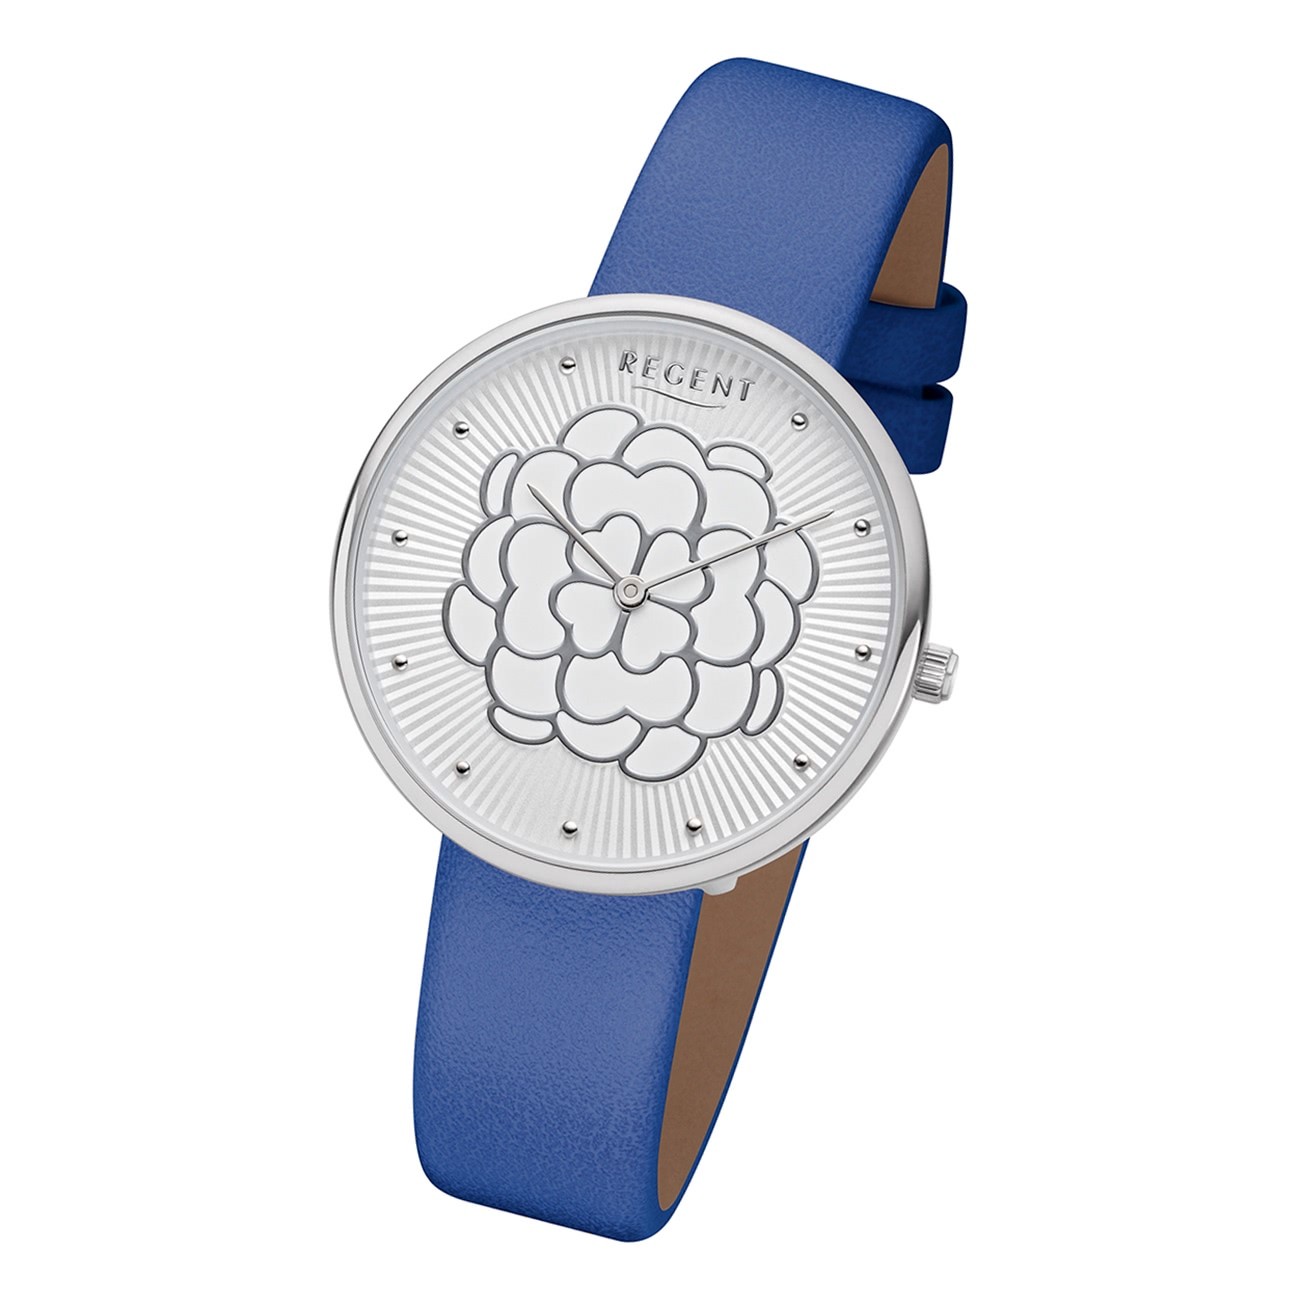 Regent Damen Armbanduhr Analog BA-603 Quarz-Uhr Leder blau URBA603